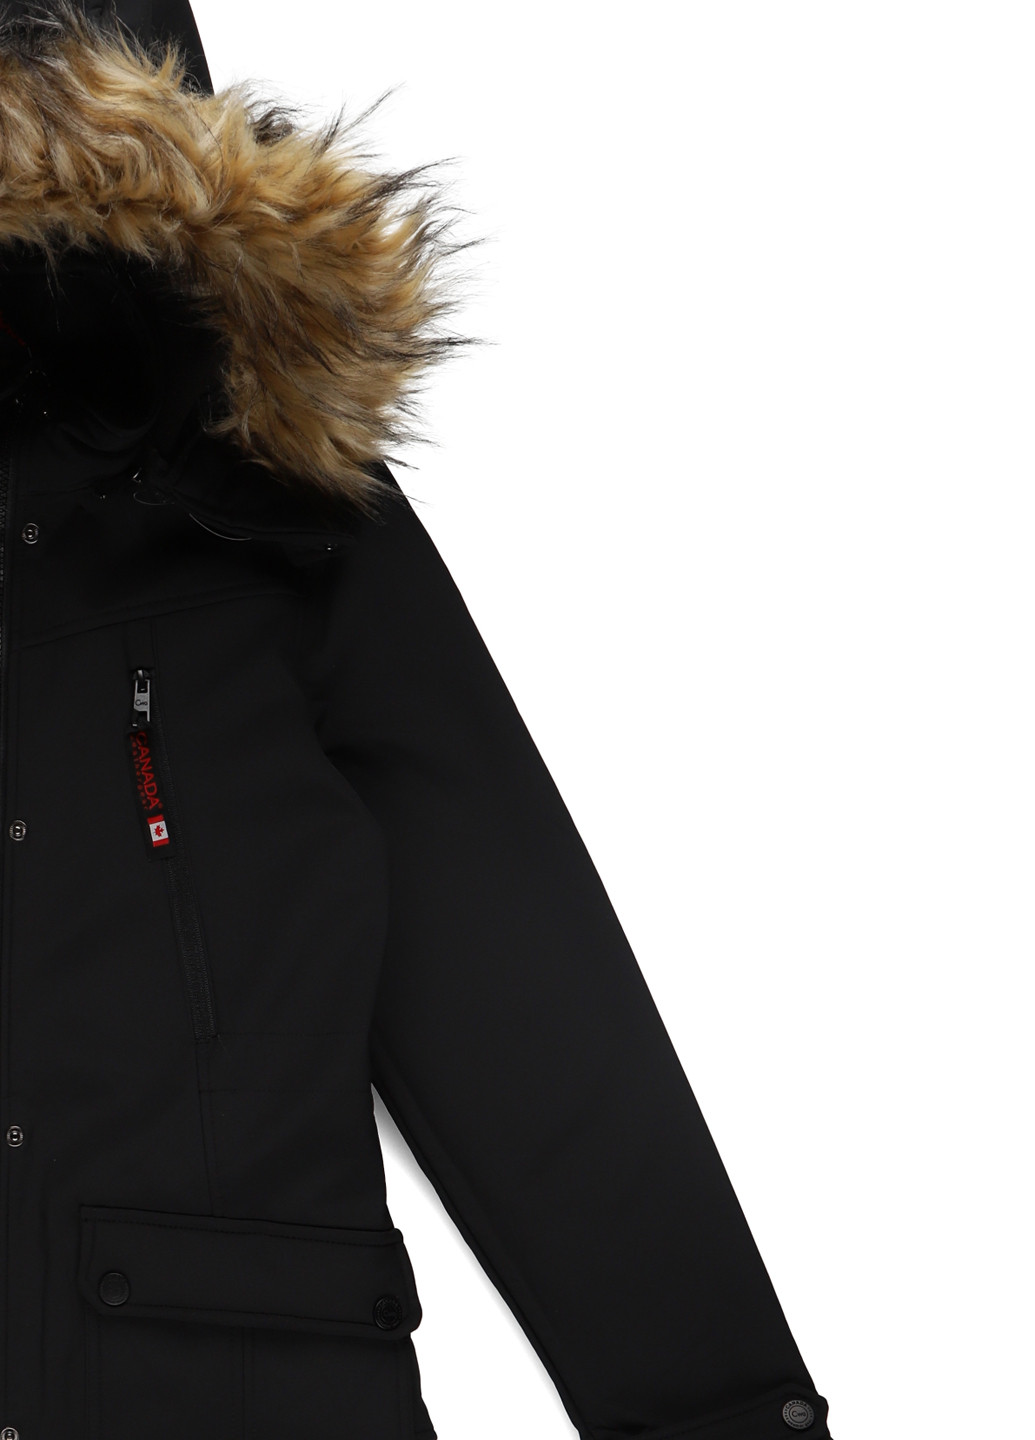 Черная зимняя куртка Canada Weather Gear